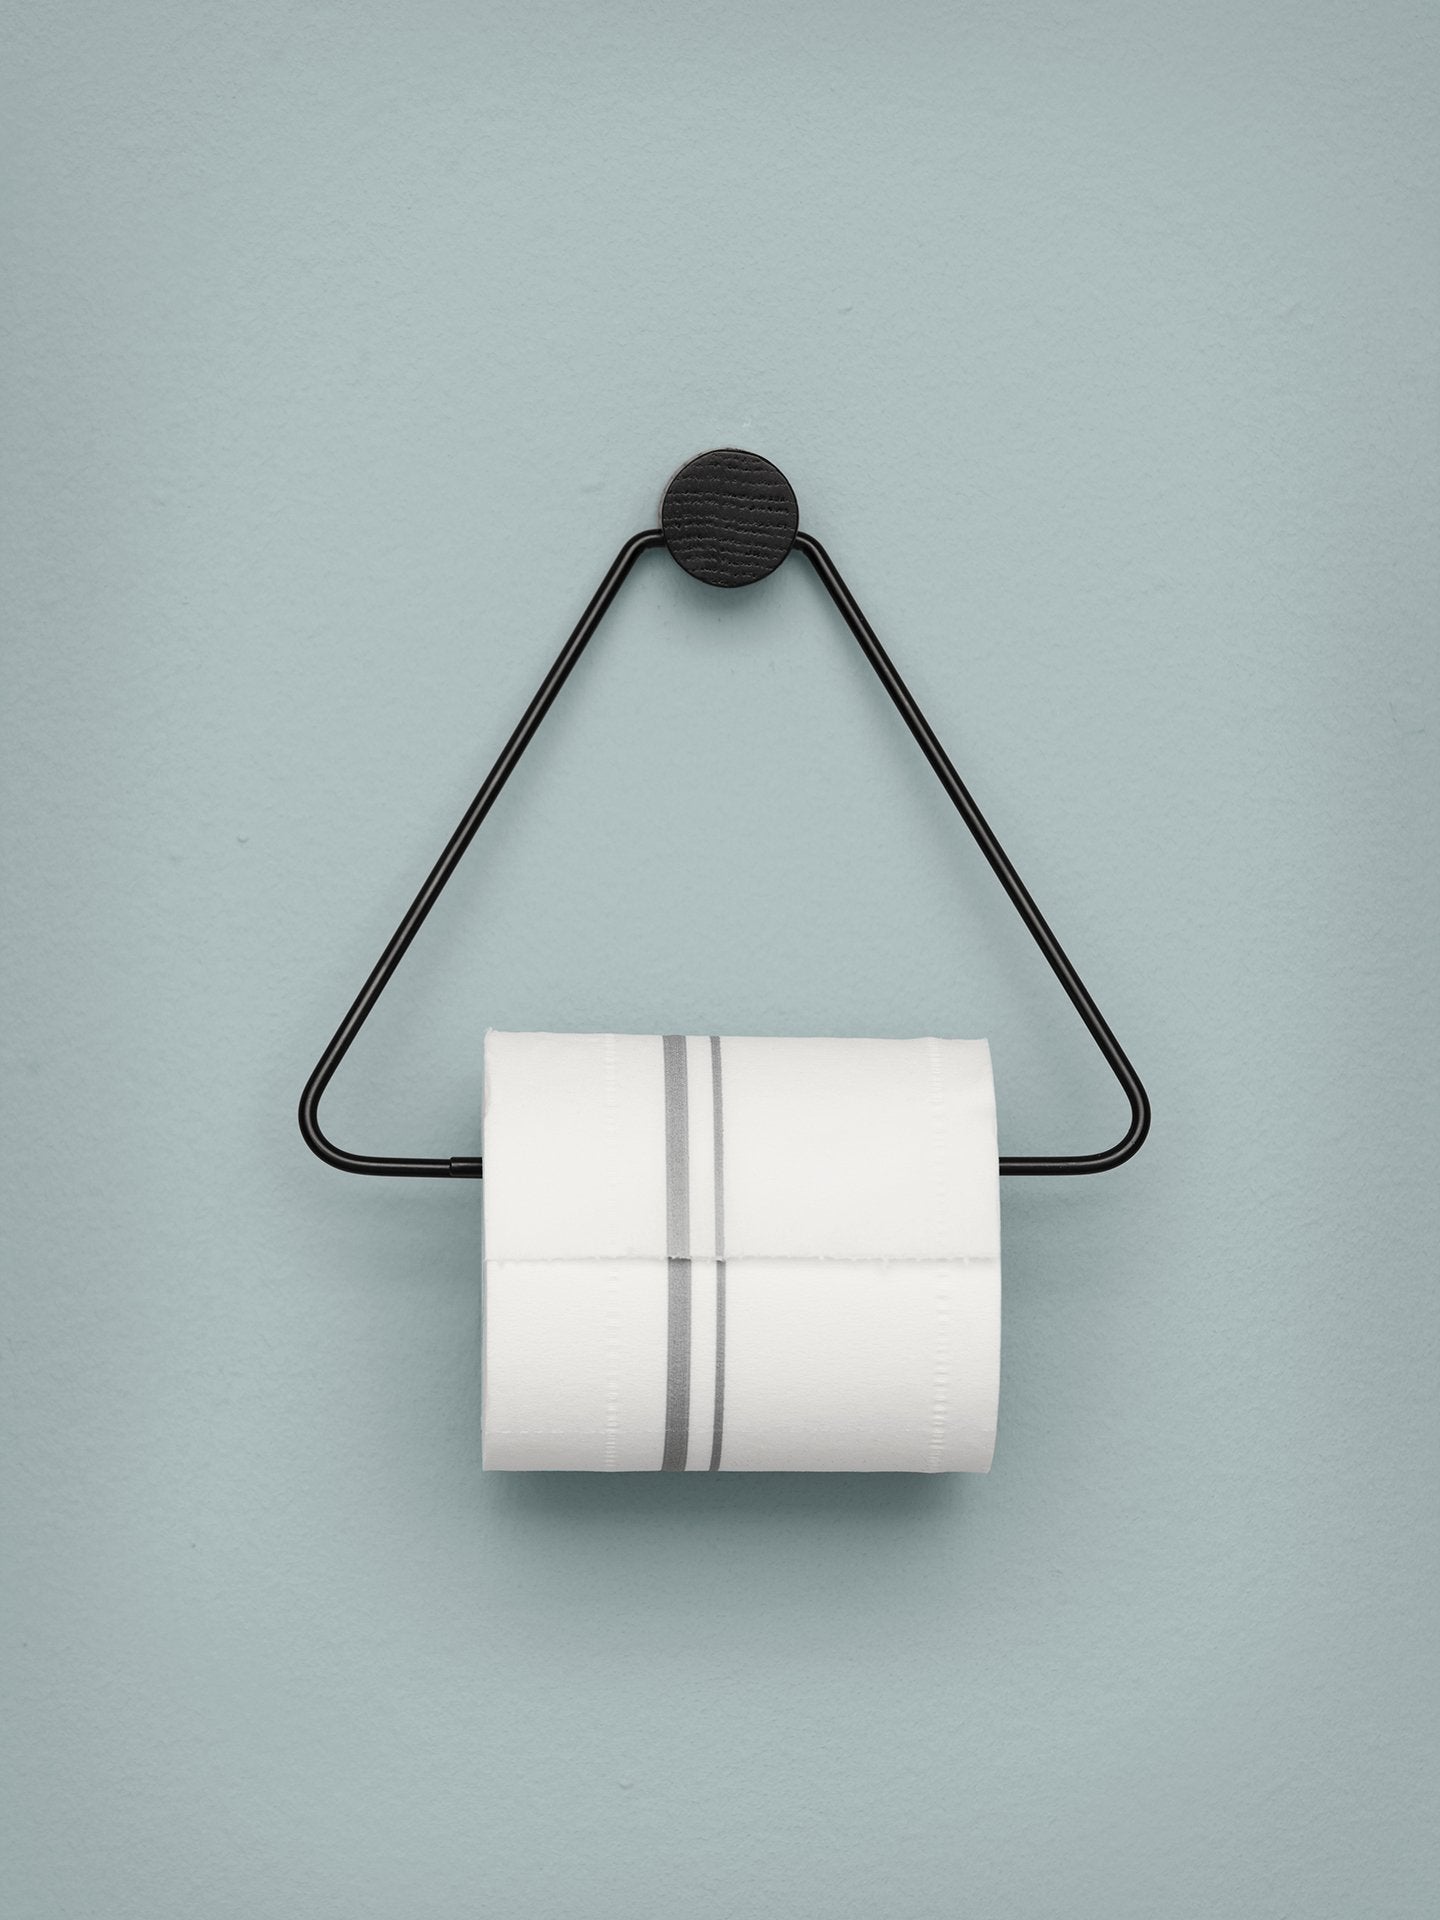 Toilettenpapierhalter - KAQTU Design